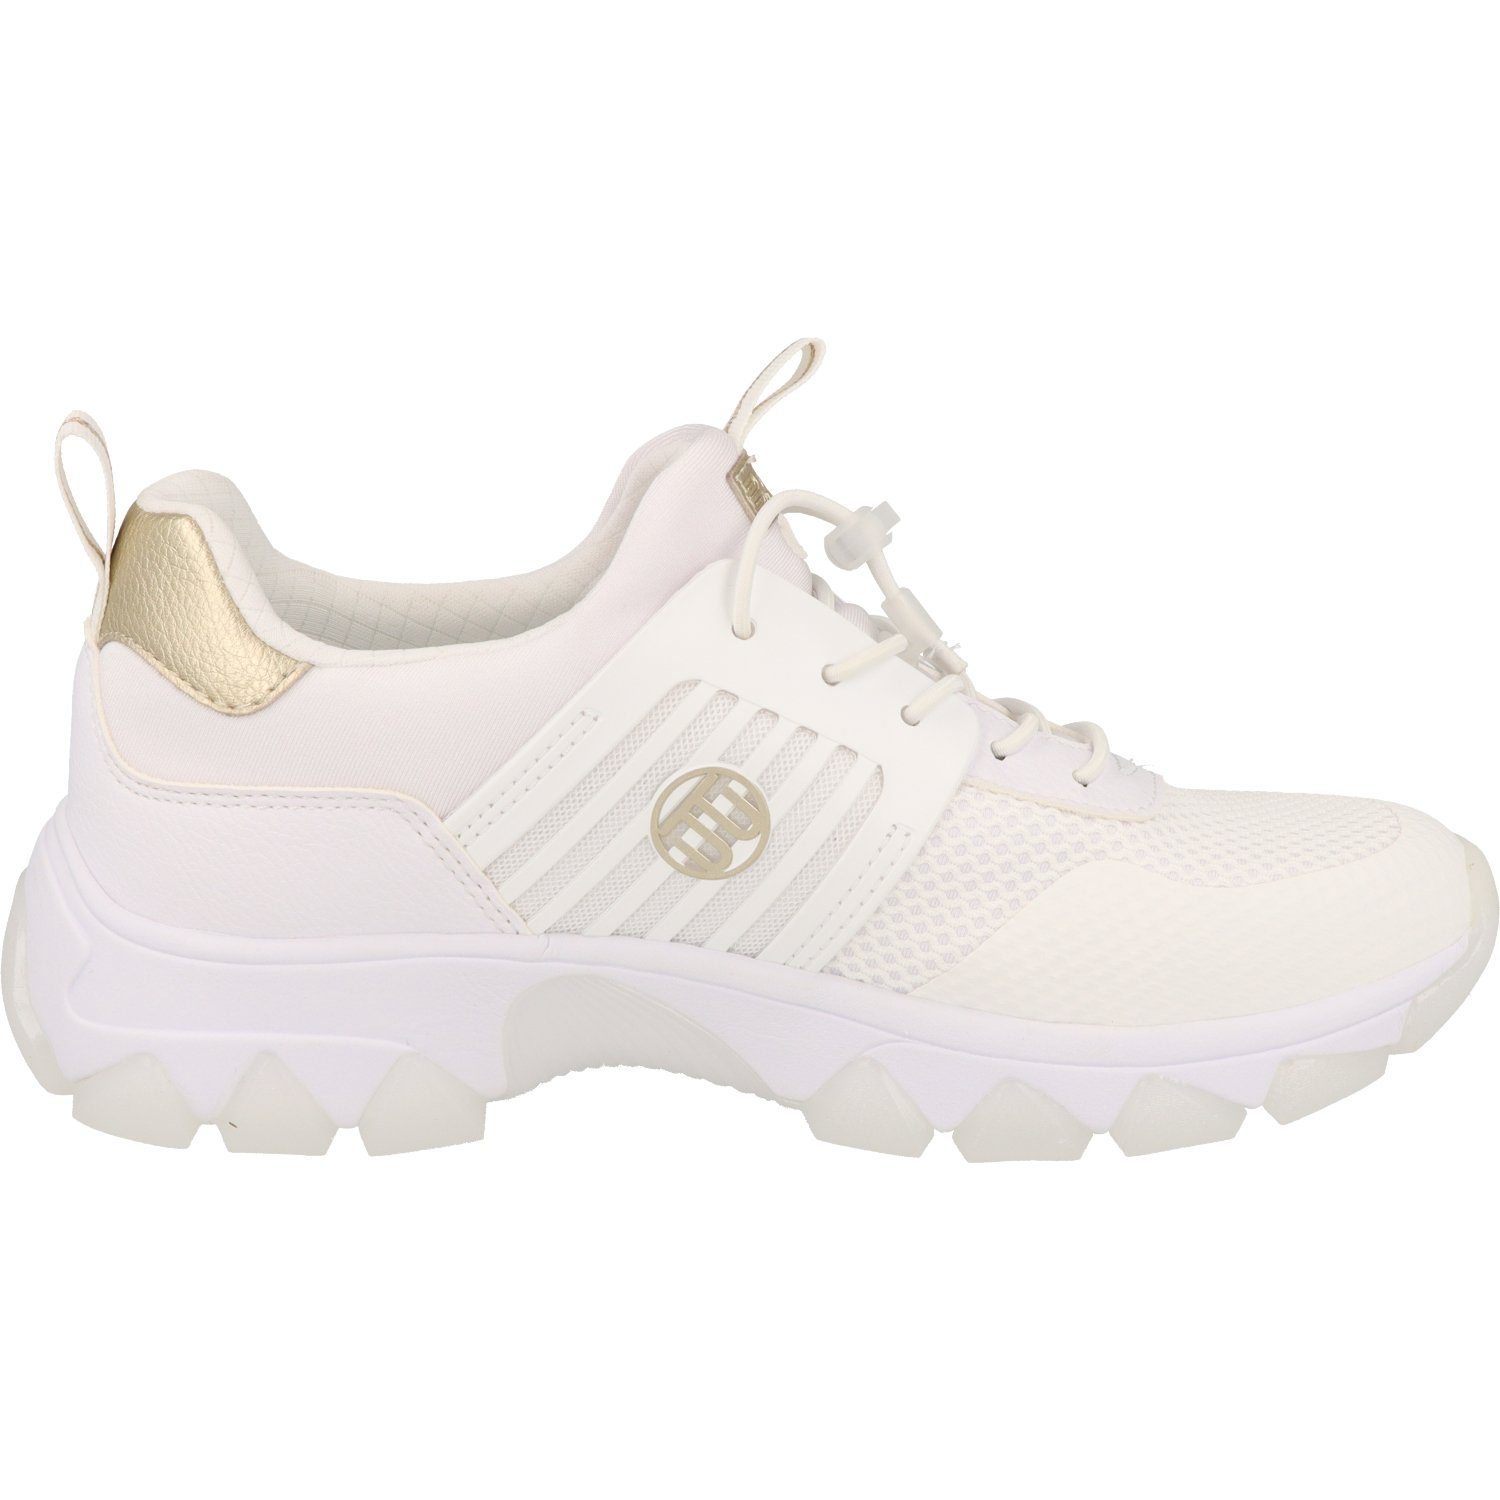 White/Gold Halbschuhe Schuhe Sneaker Yuki Damen Sneaker D32-95207-6969 BAGATT sportliche